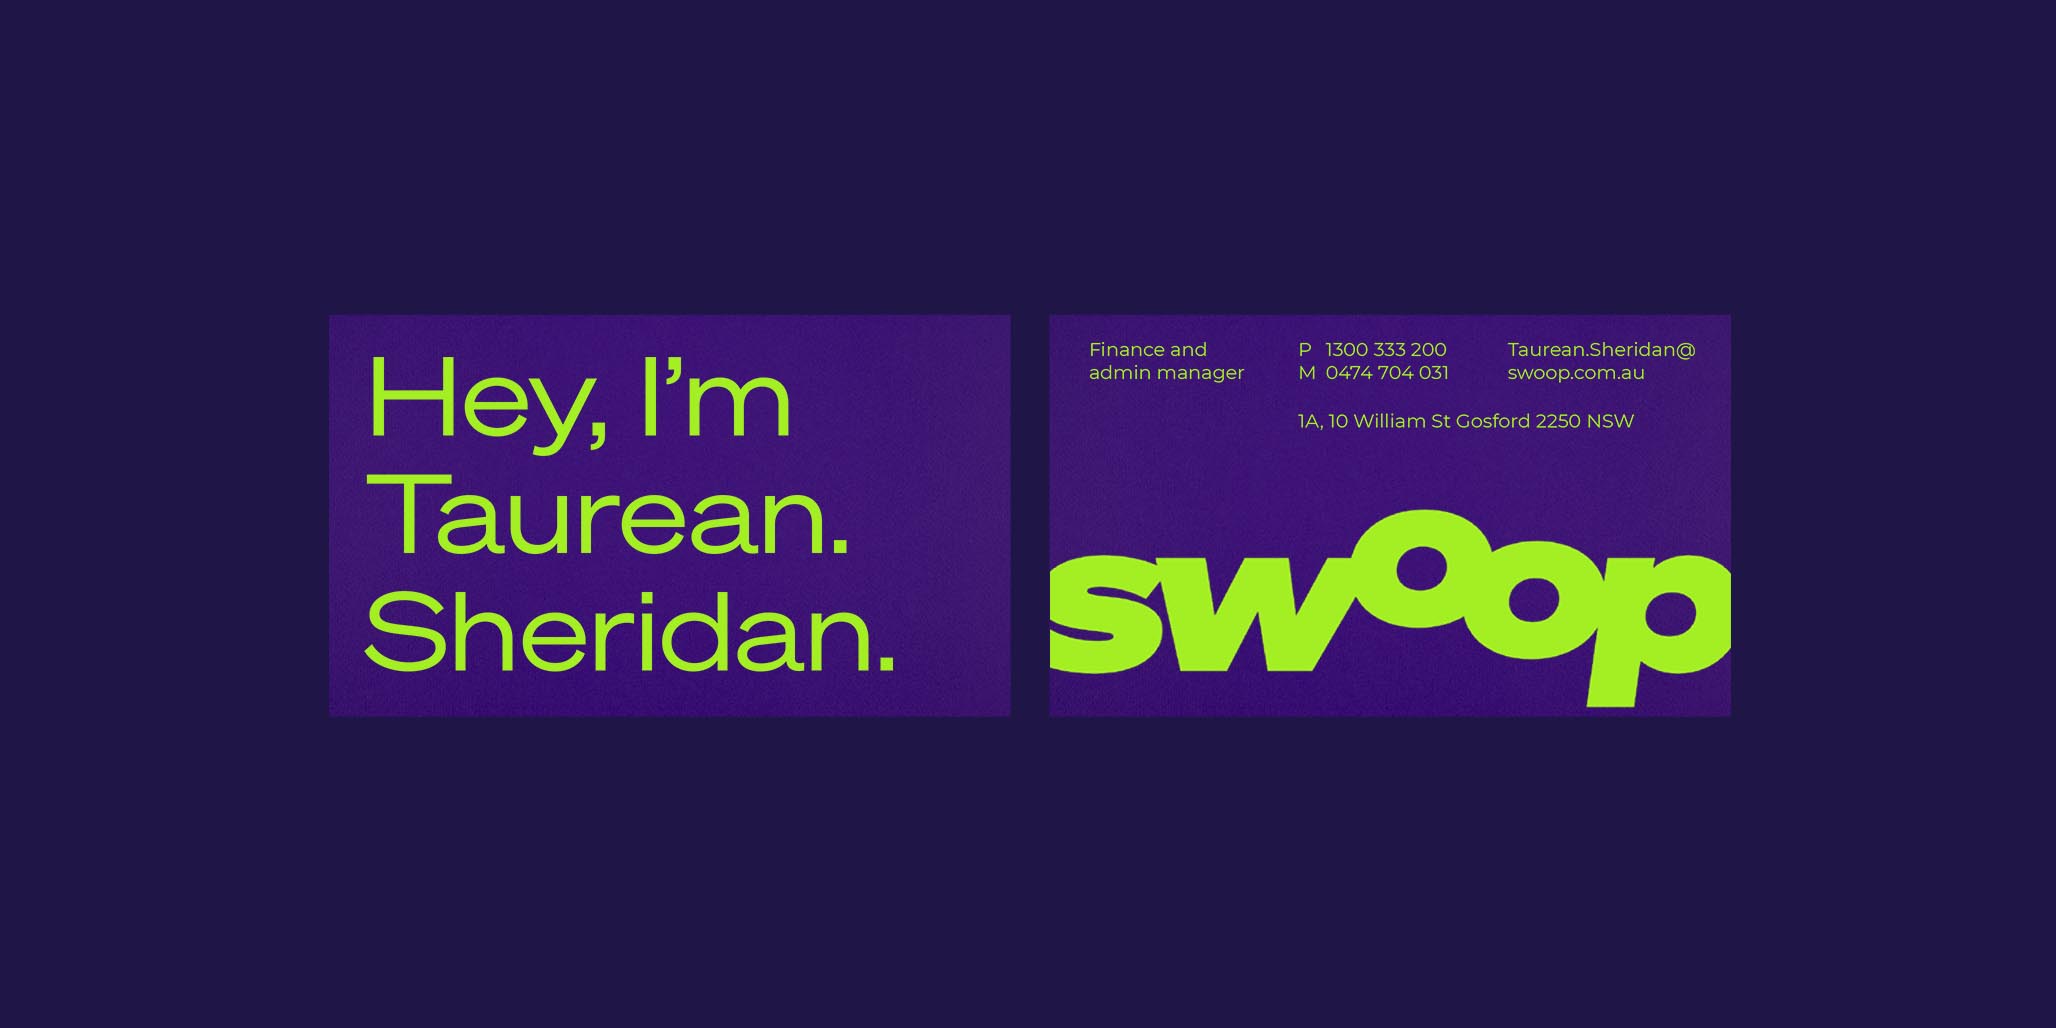 Brand Agency, Percept, create Brand Identity for Swoop, an Australian telco company, image G